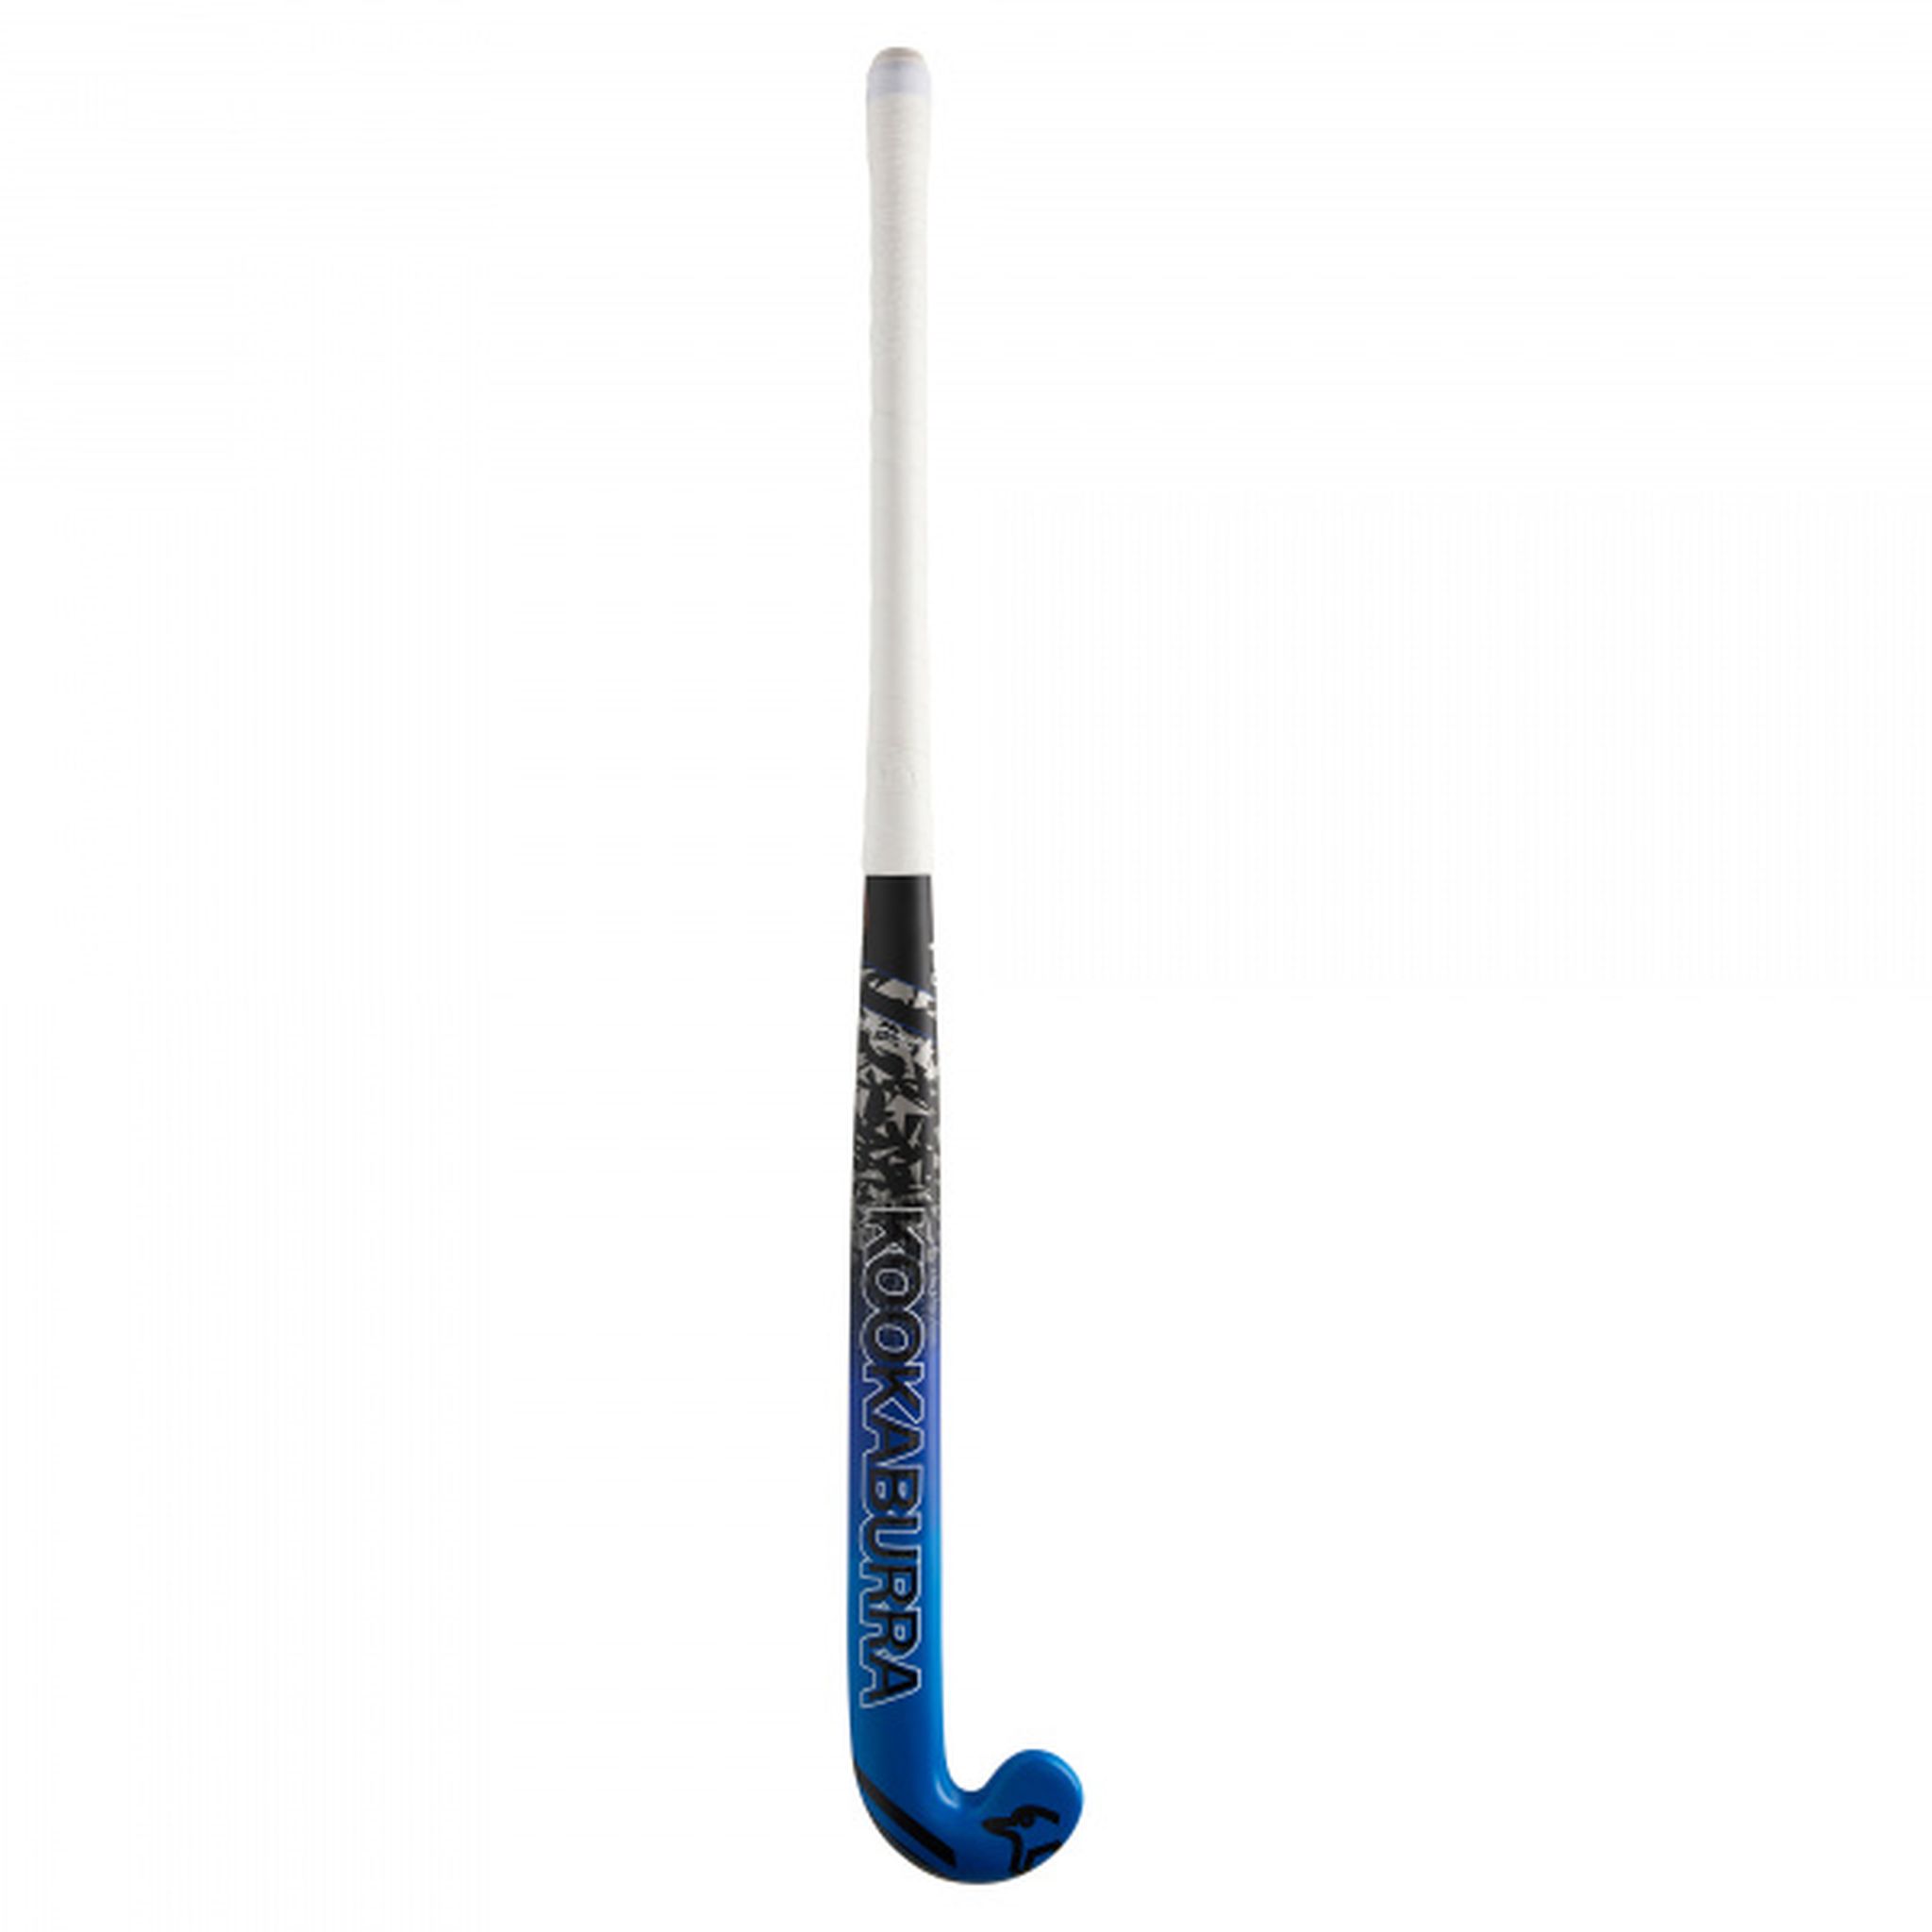 Kookaburra Origin 400 LBOW Hockey Stick